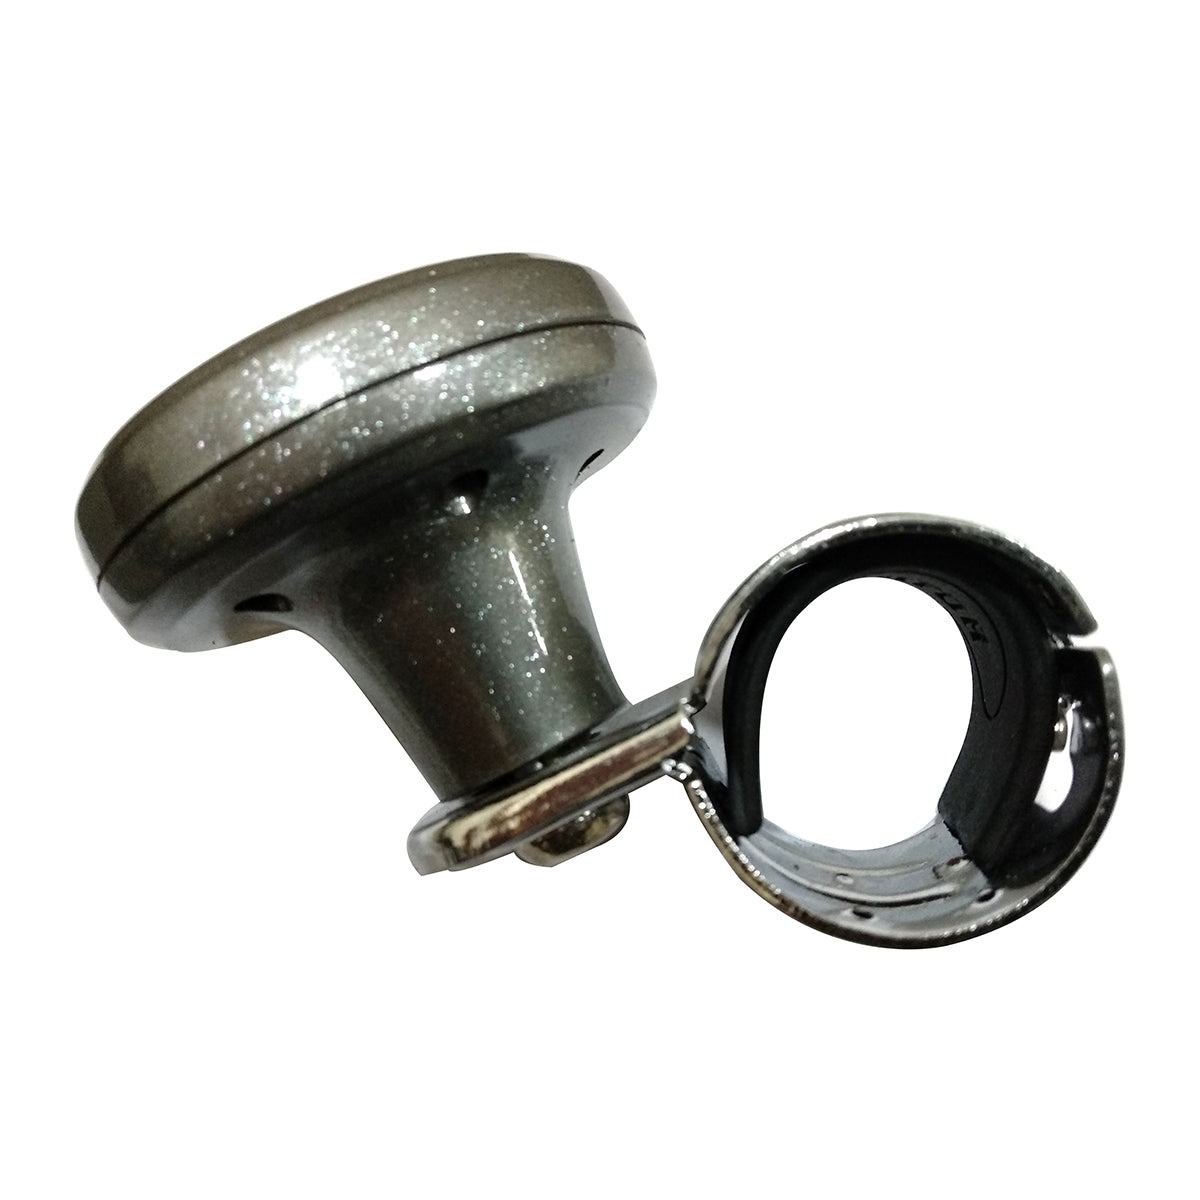 Oshotto I-QUE (IIM) Power Handle (SK-018) Car Steering Spinner Wheel Knob (Black)